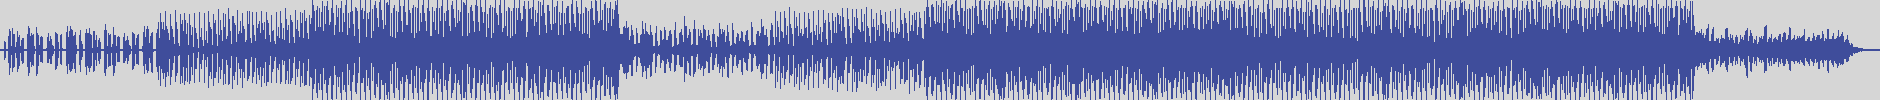 nf_boyz_records [NFY002] Crucial Stamp - Risonator [Sander Gaggo Mix] audio wave form